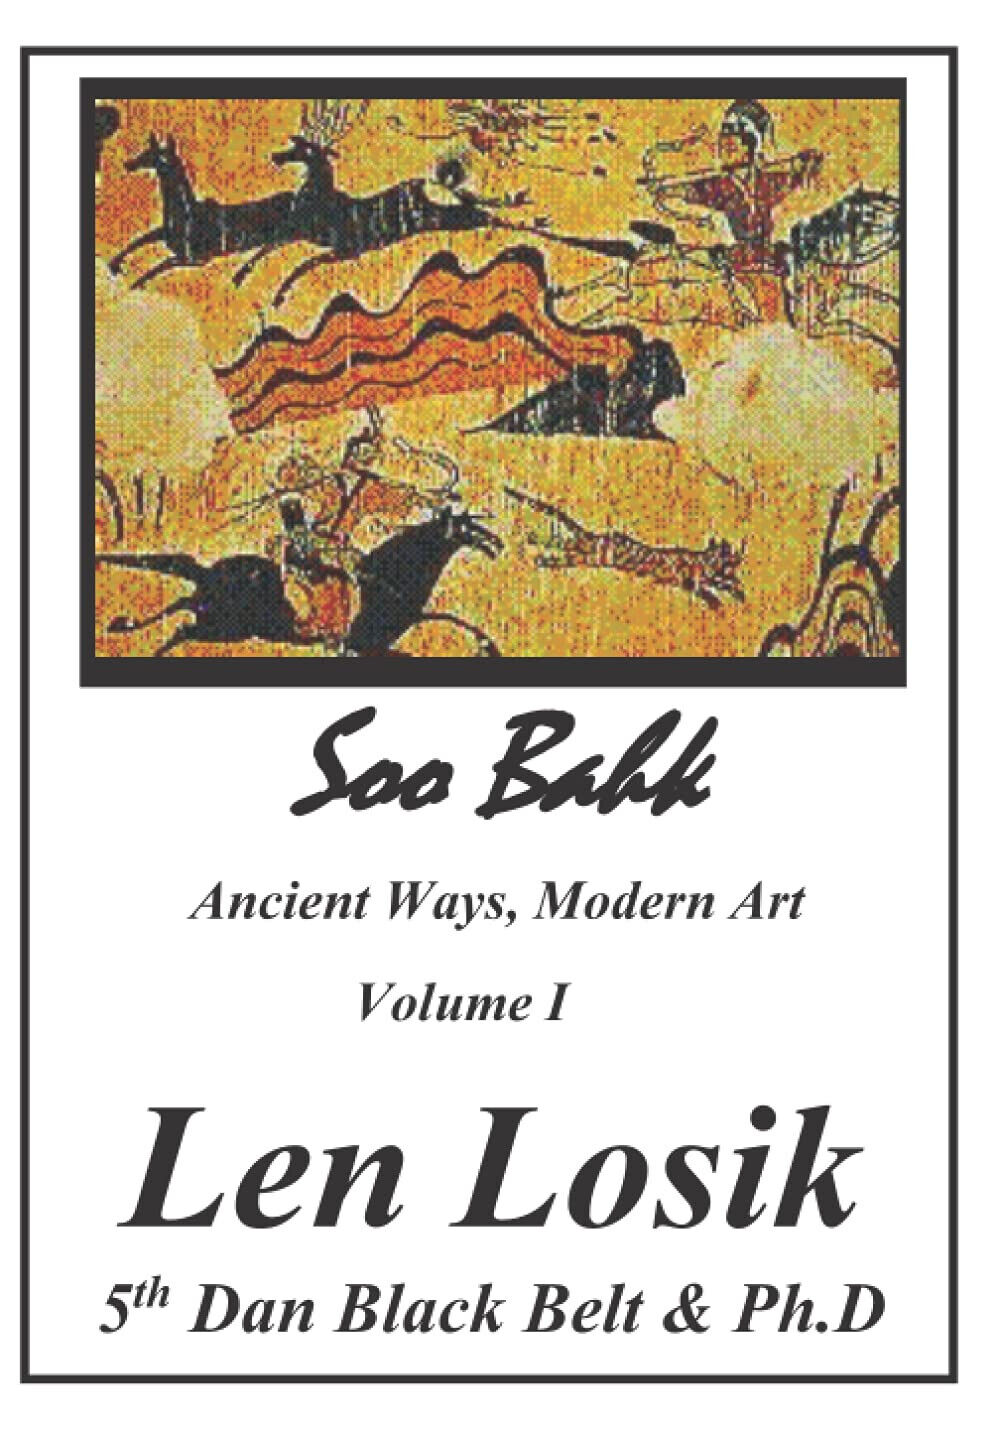 Soo Bahk, Ancient Ways, Modern Art Volume I - Len Losik Ph. D. - 2016